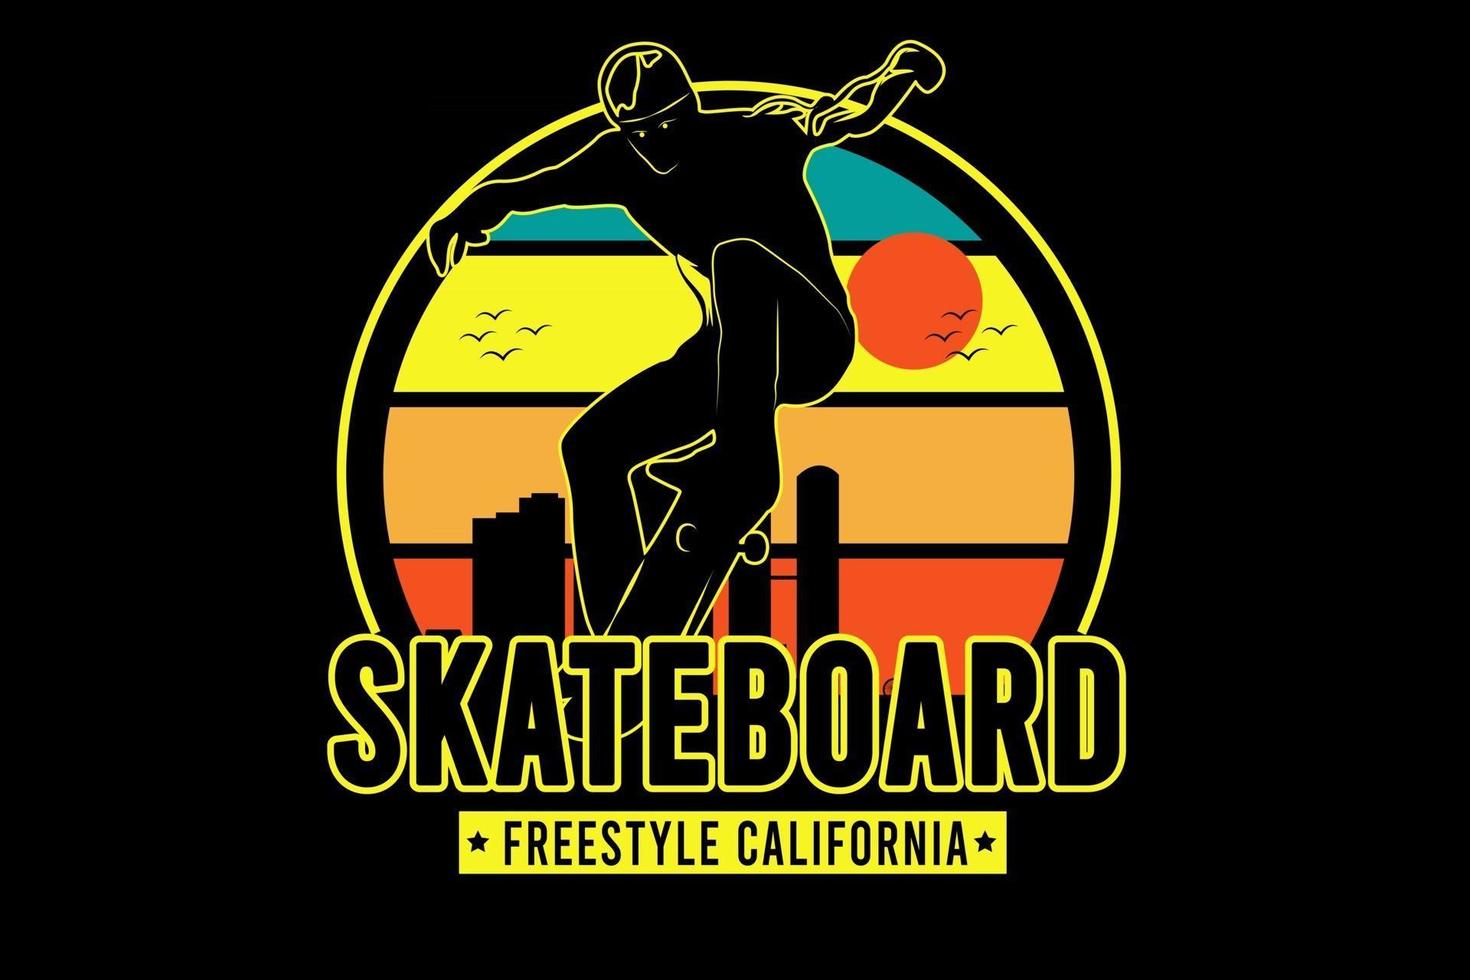 skateboard freestyle california color yellow green and orange vector